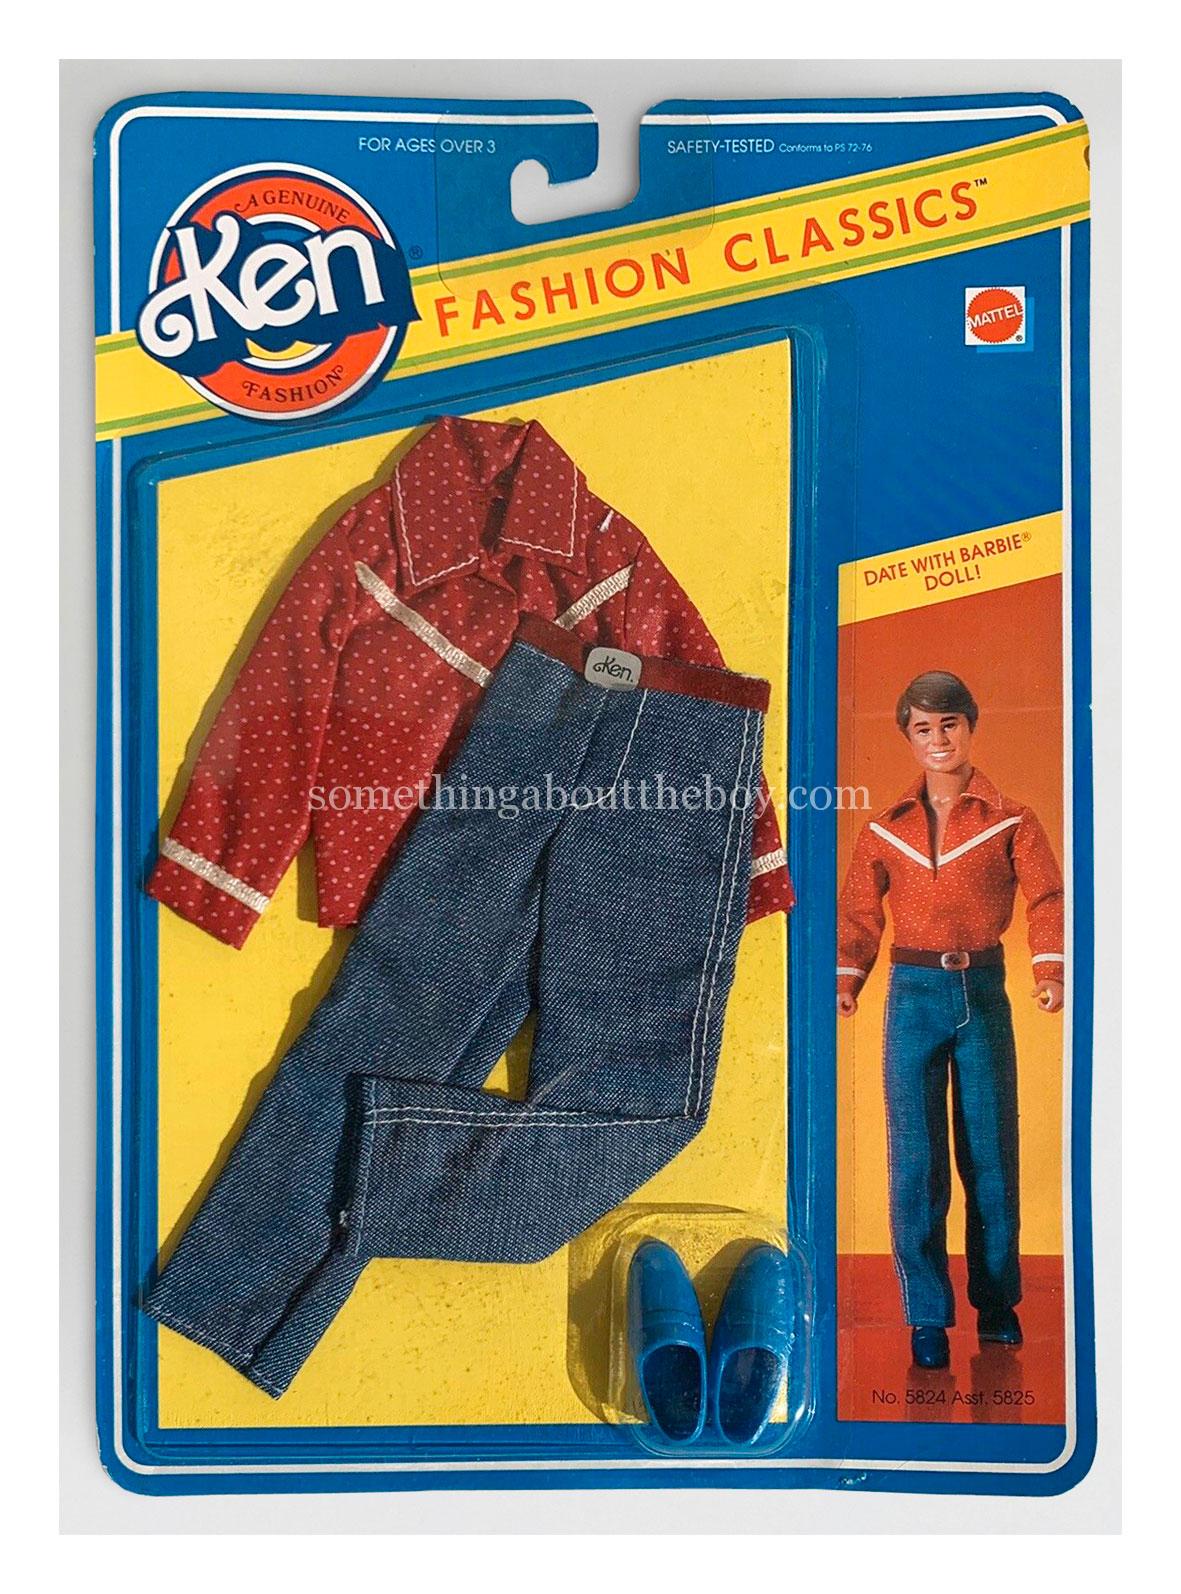 1983 Fashion Classics #5824 in original packaging